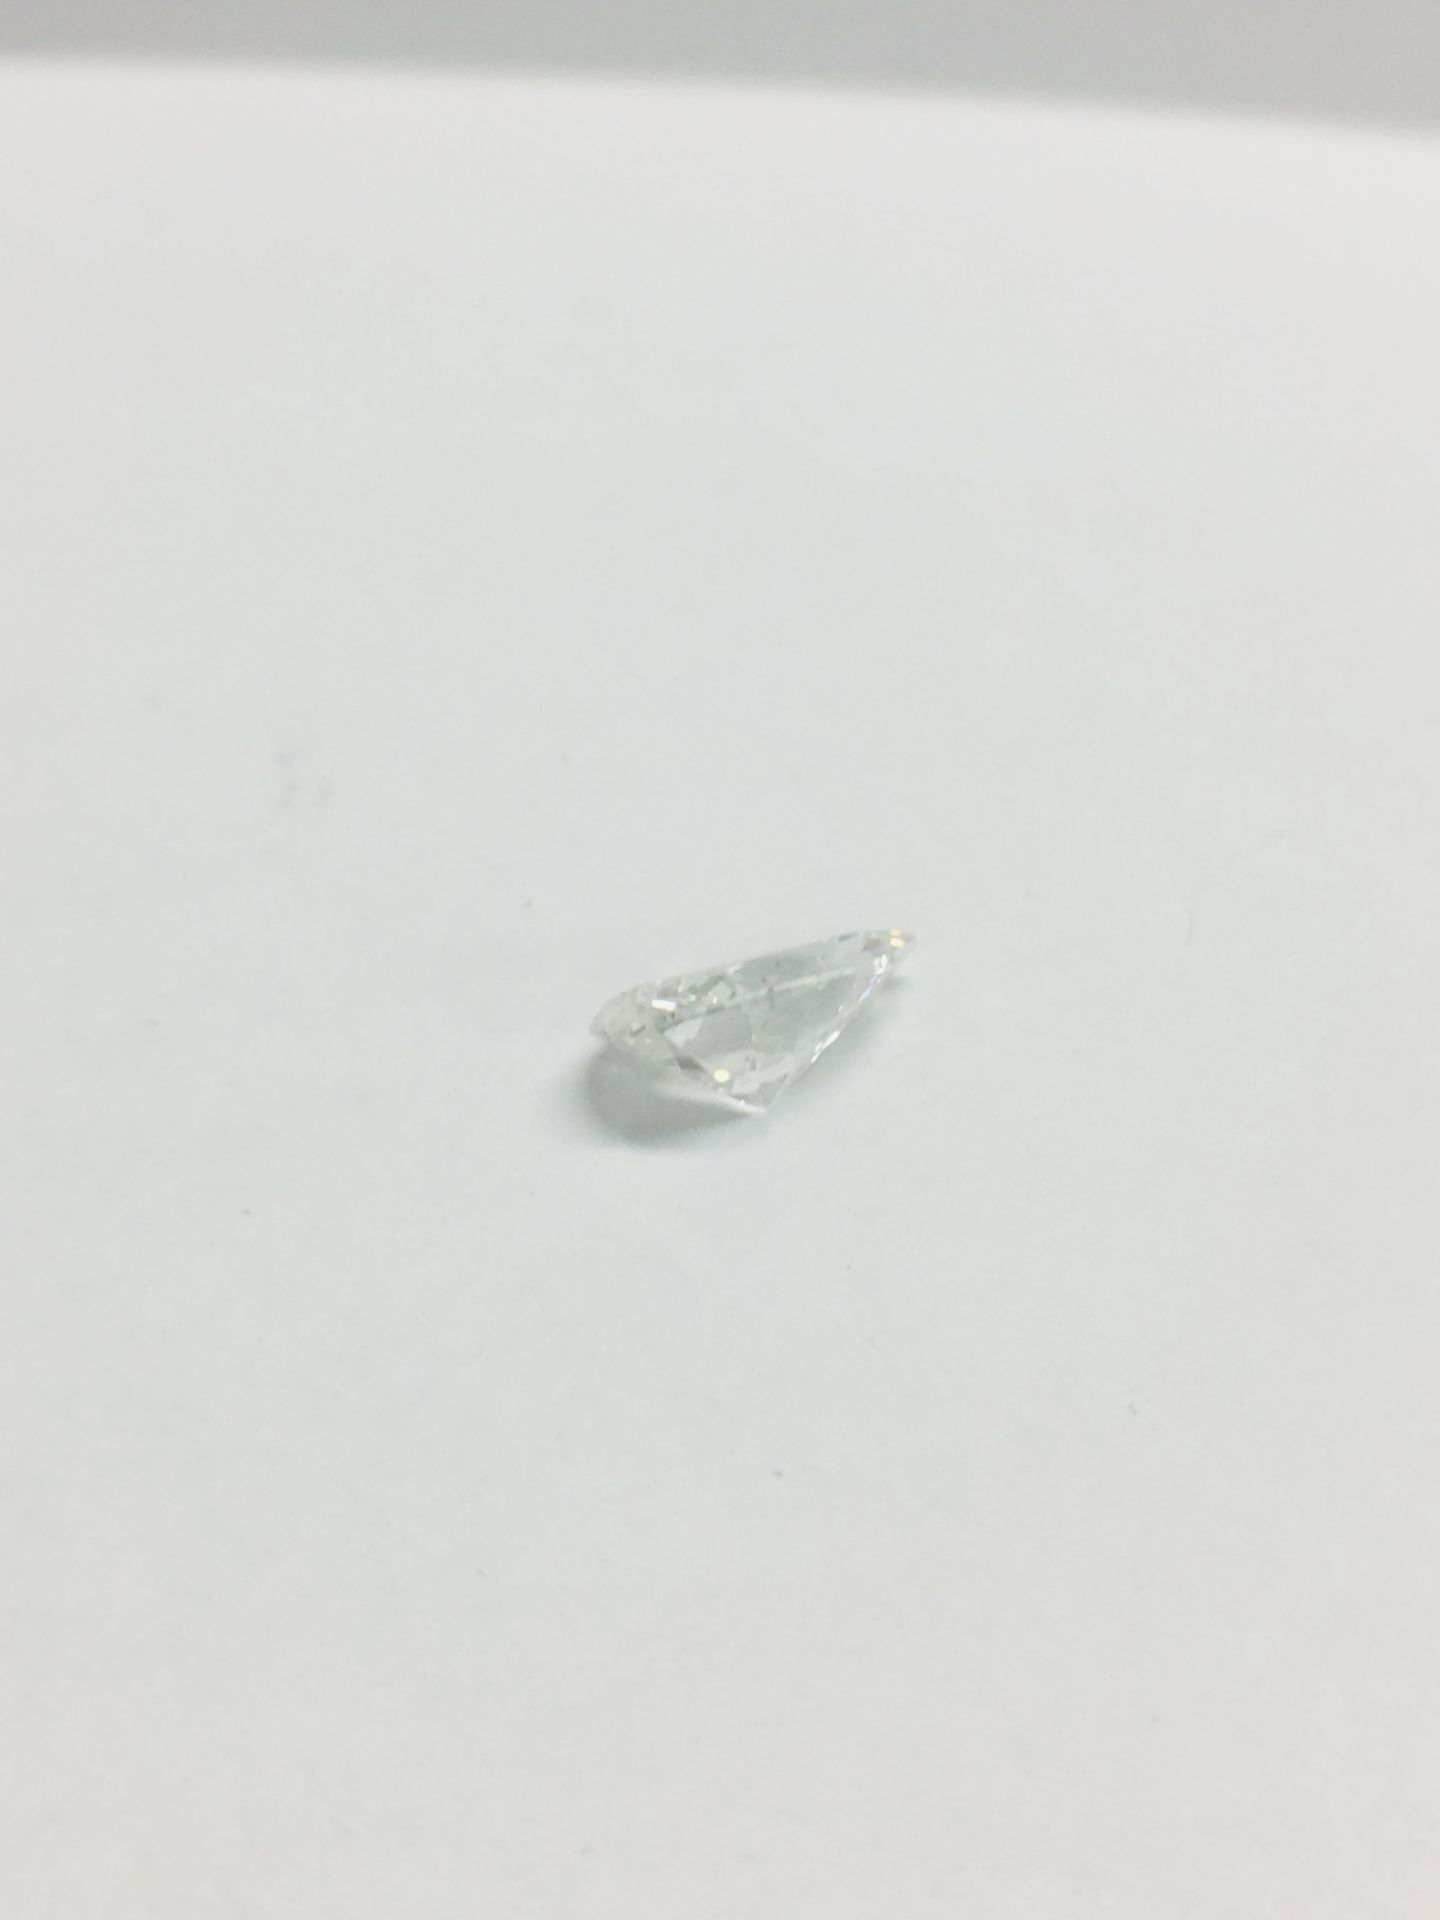 1.57ct Pearshape natural Diamond,F colour,i1 clarity - Image 4 of 5